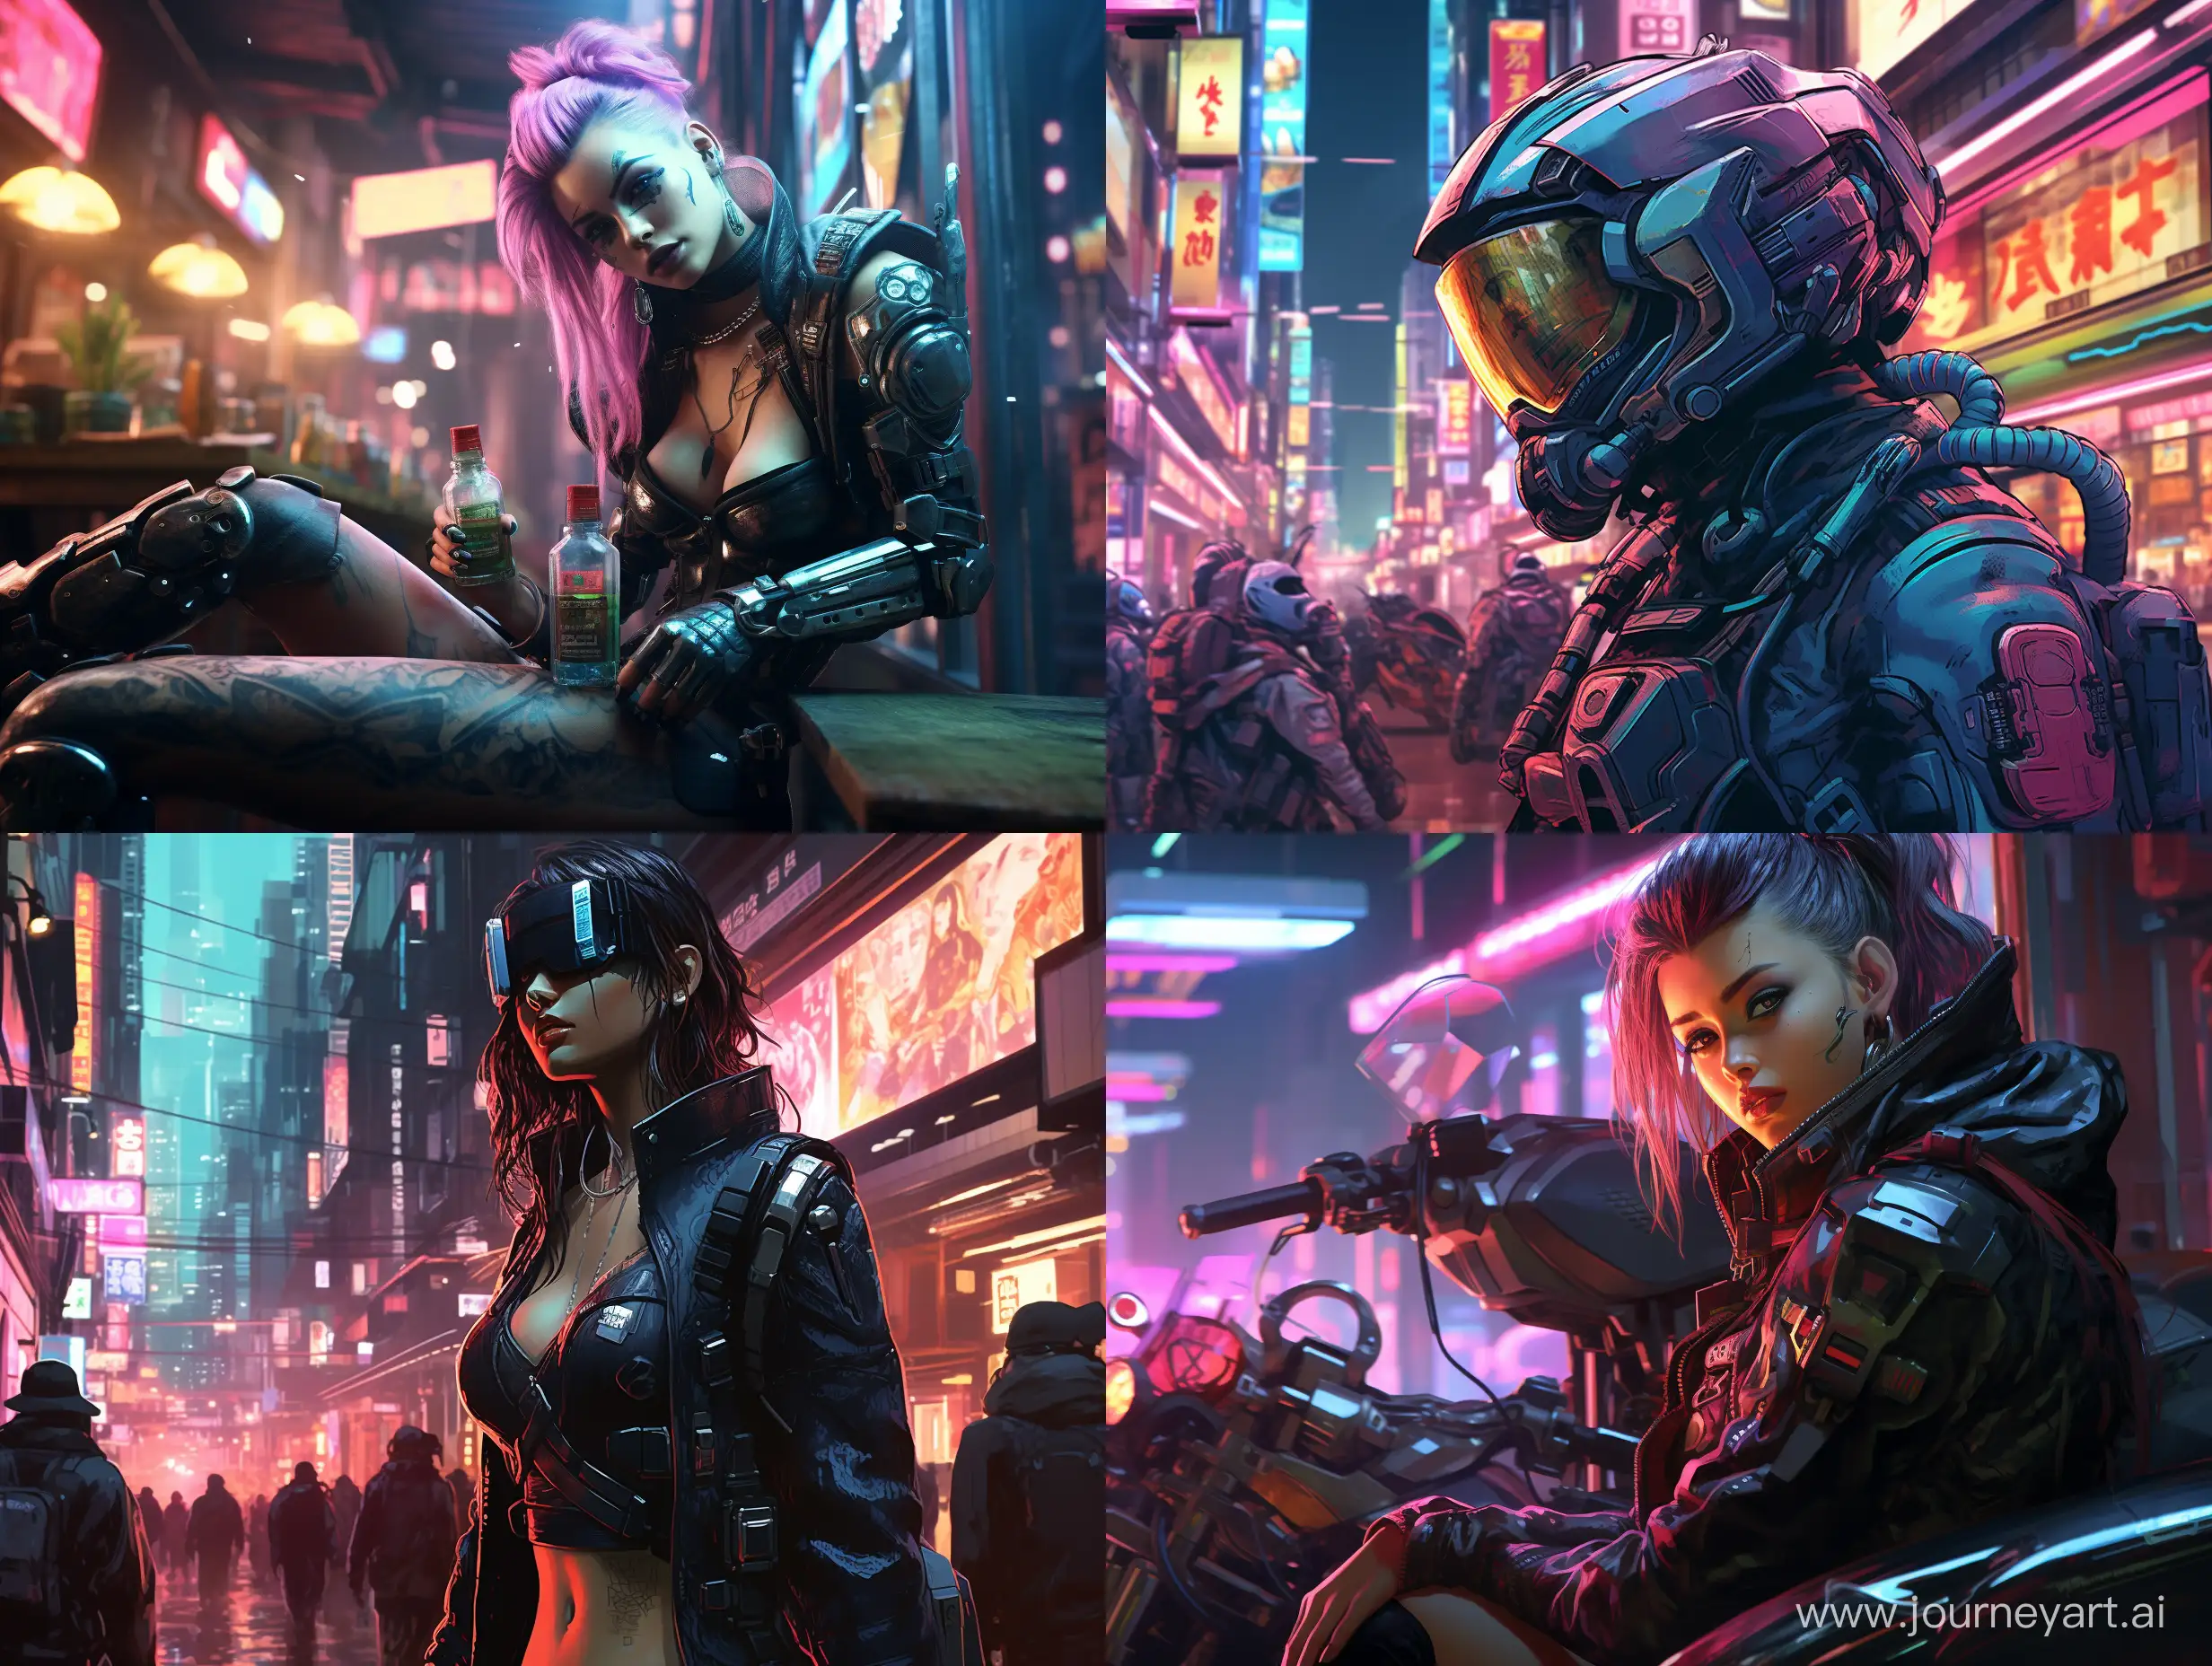 Futuristic-Cyberpunk-Cityscape-in-43-Aspect-Ratio-Digital-Art